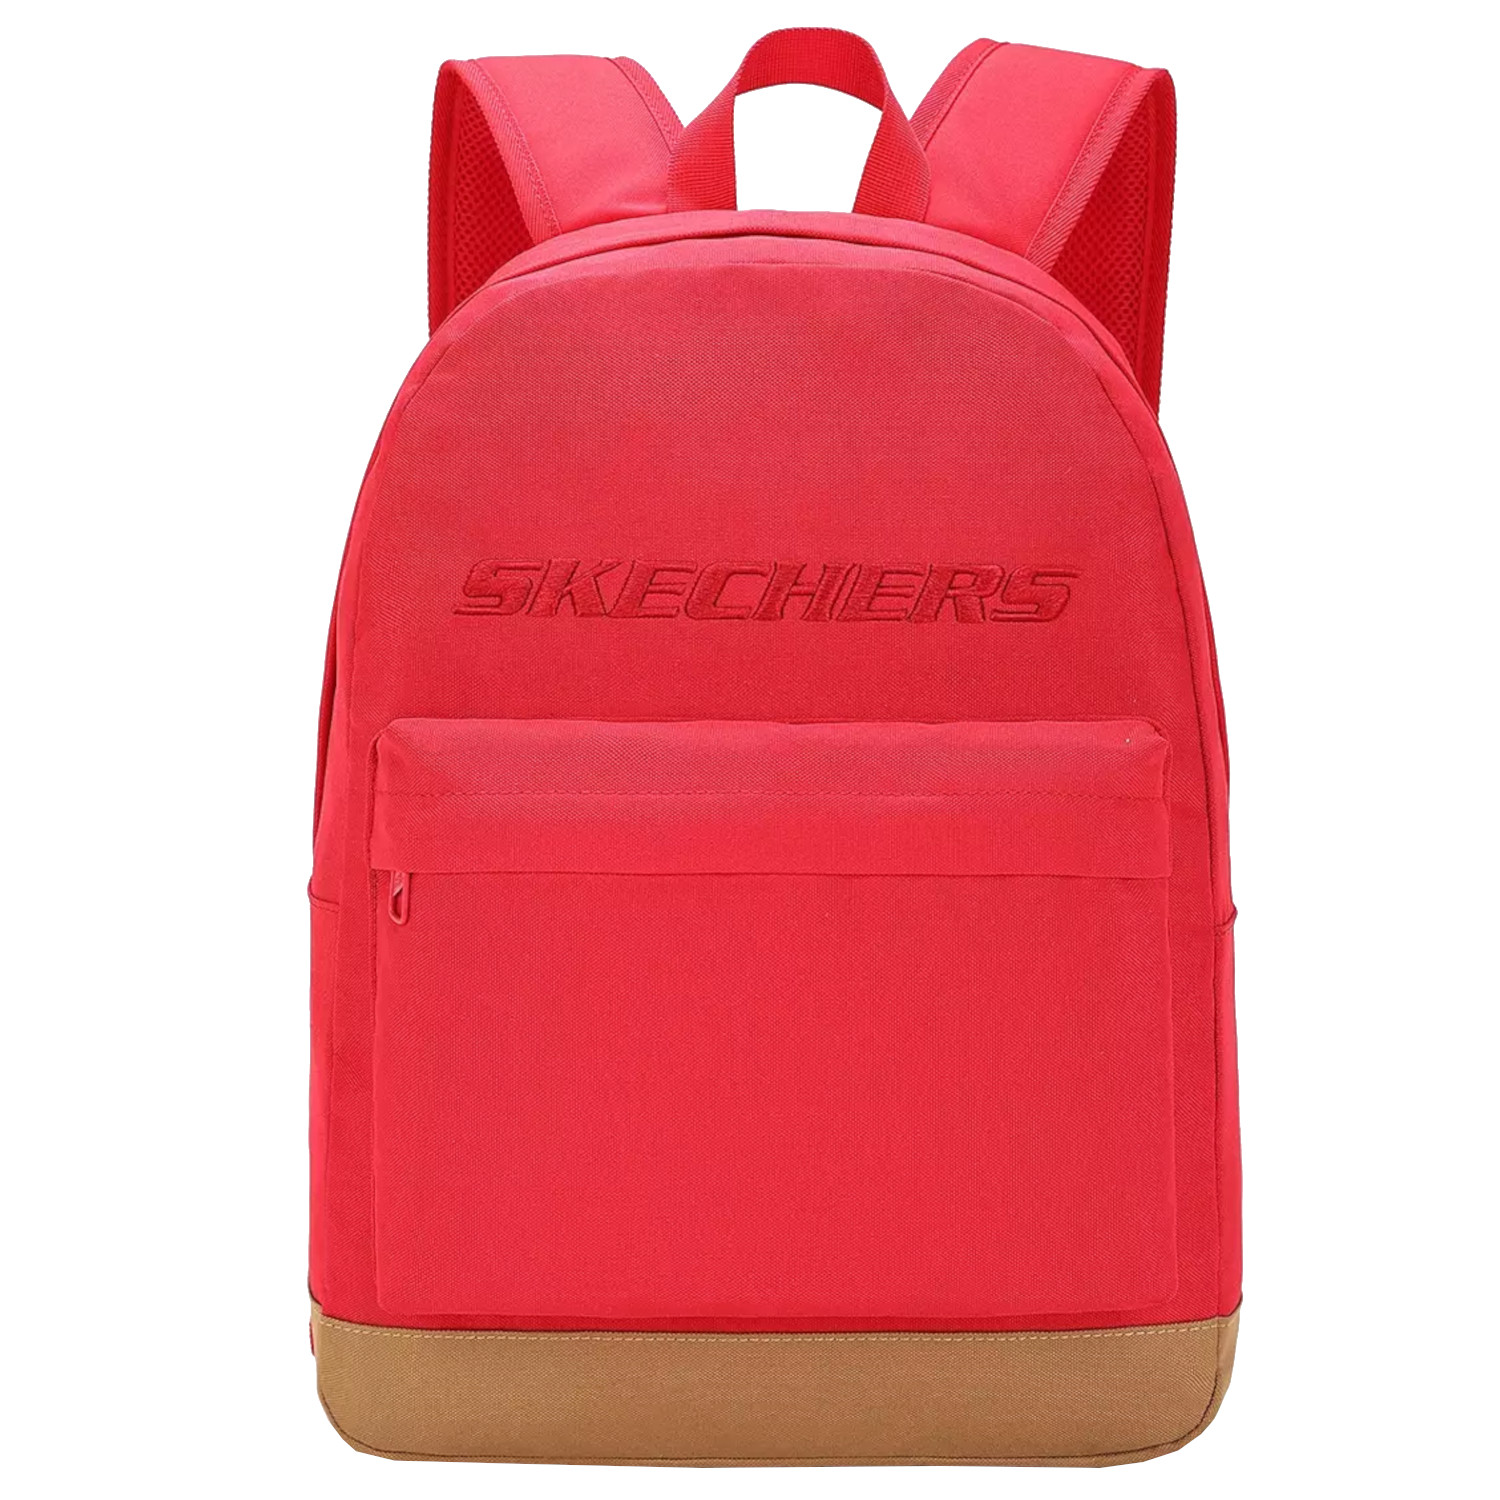 Рюкзак Skechers Skechers Denver Backpack, красный рюкзак skechers желтый